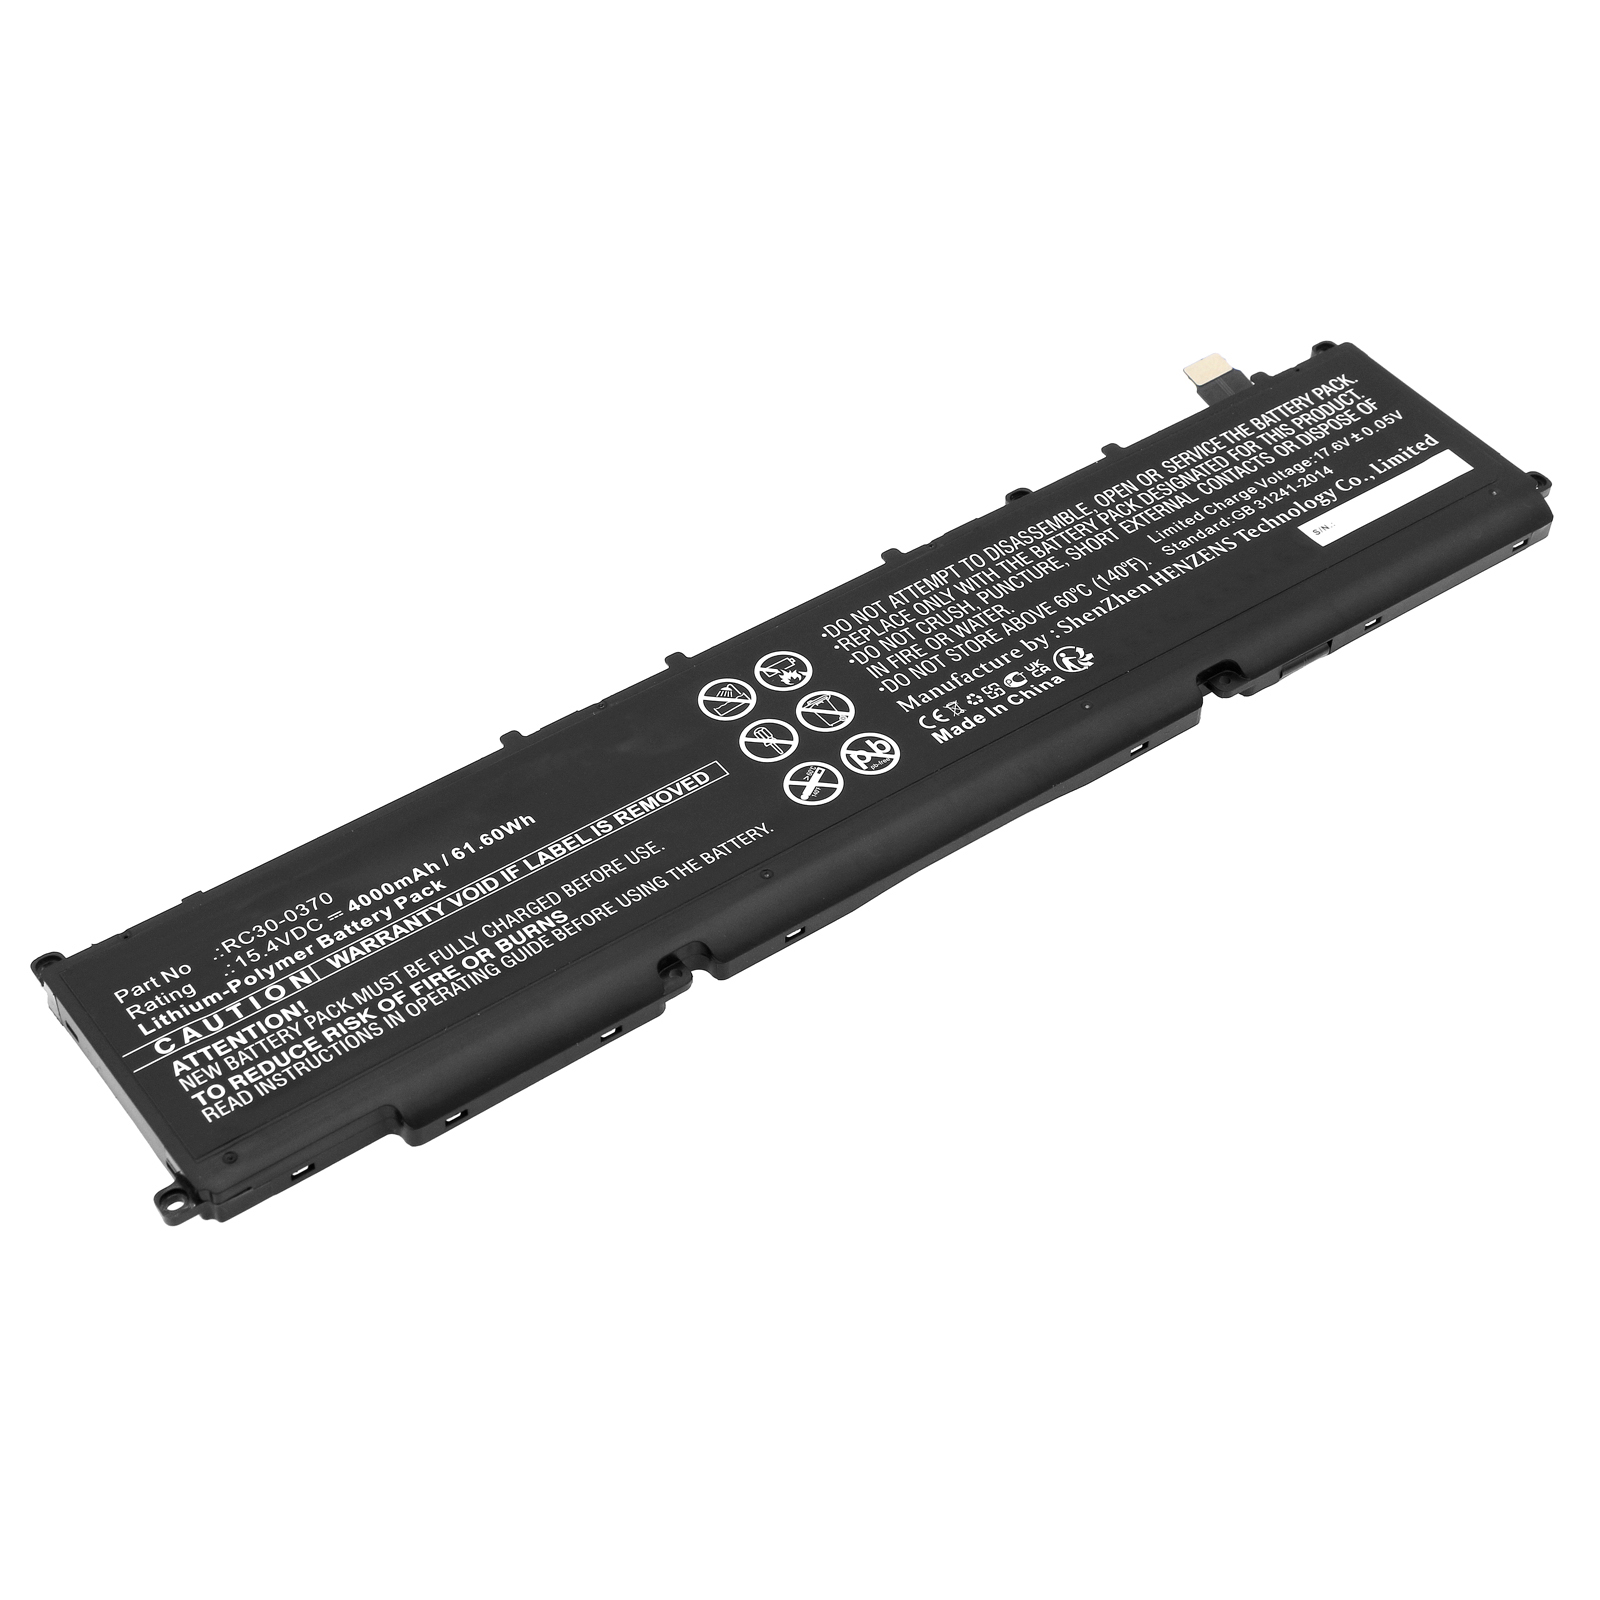 Synergy Digital Laptop Battery, Compatible with Razer RC30-0370 Laptop Battery (Li-Pol, 15.4V, 4000mAh)